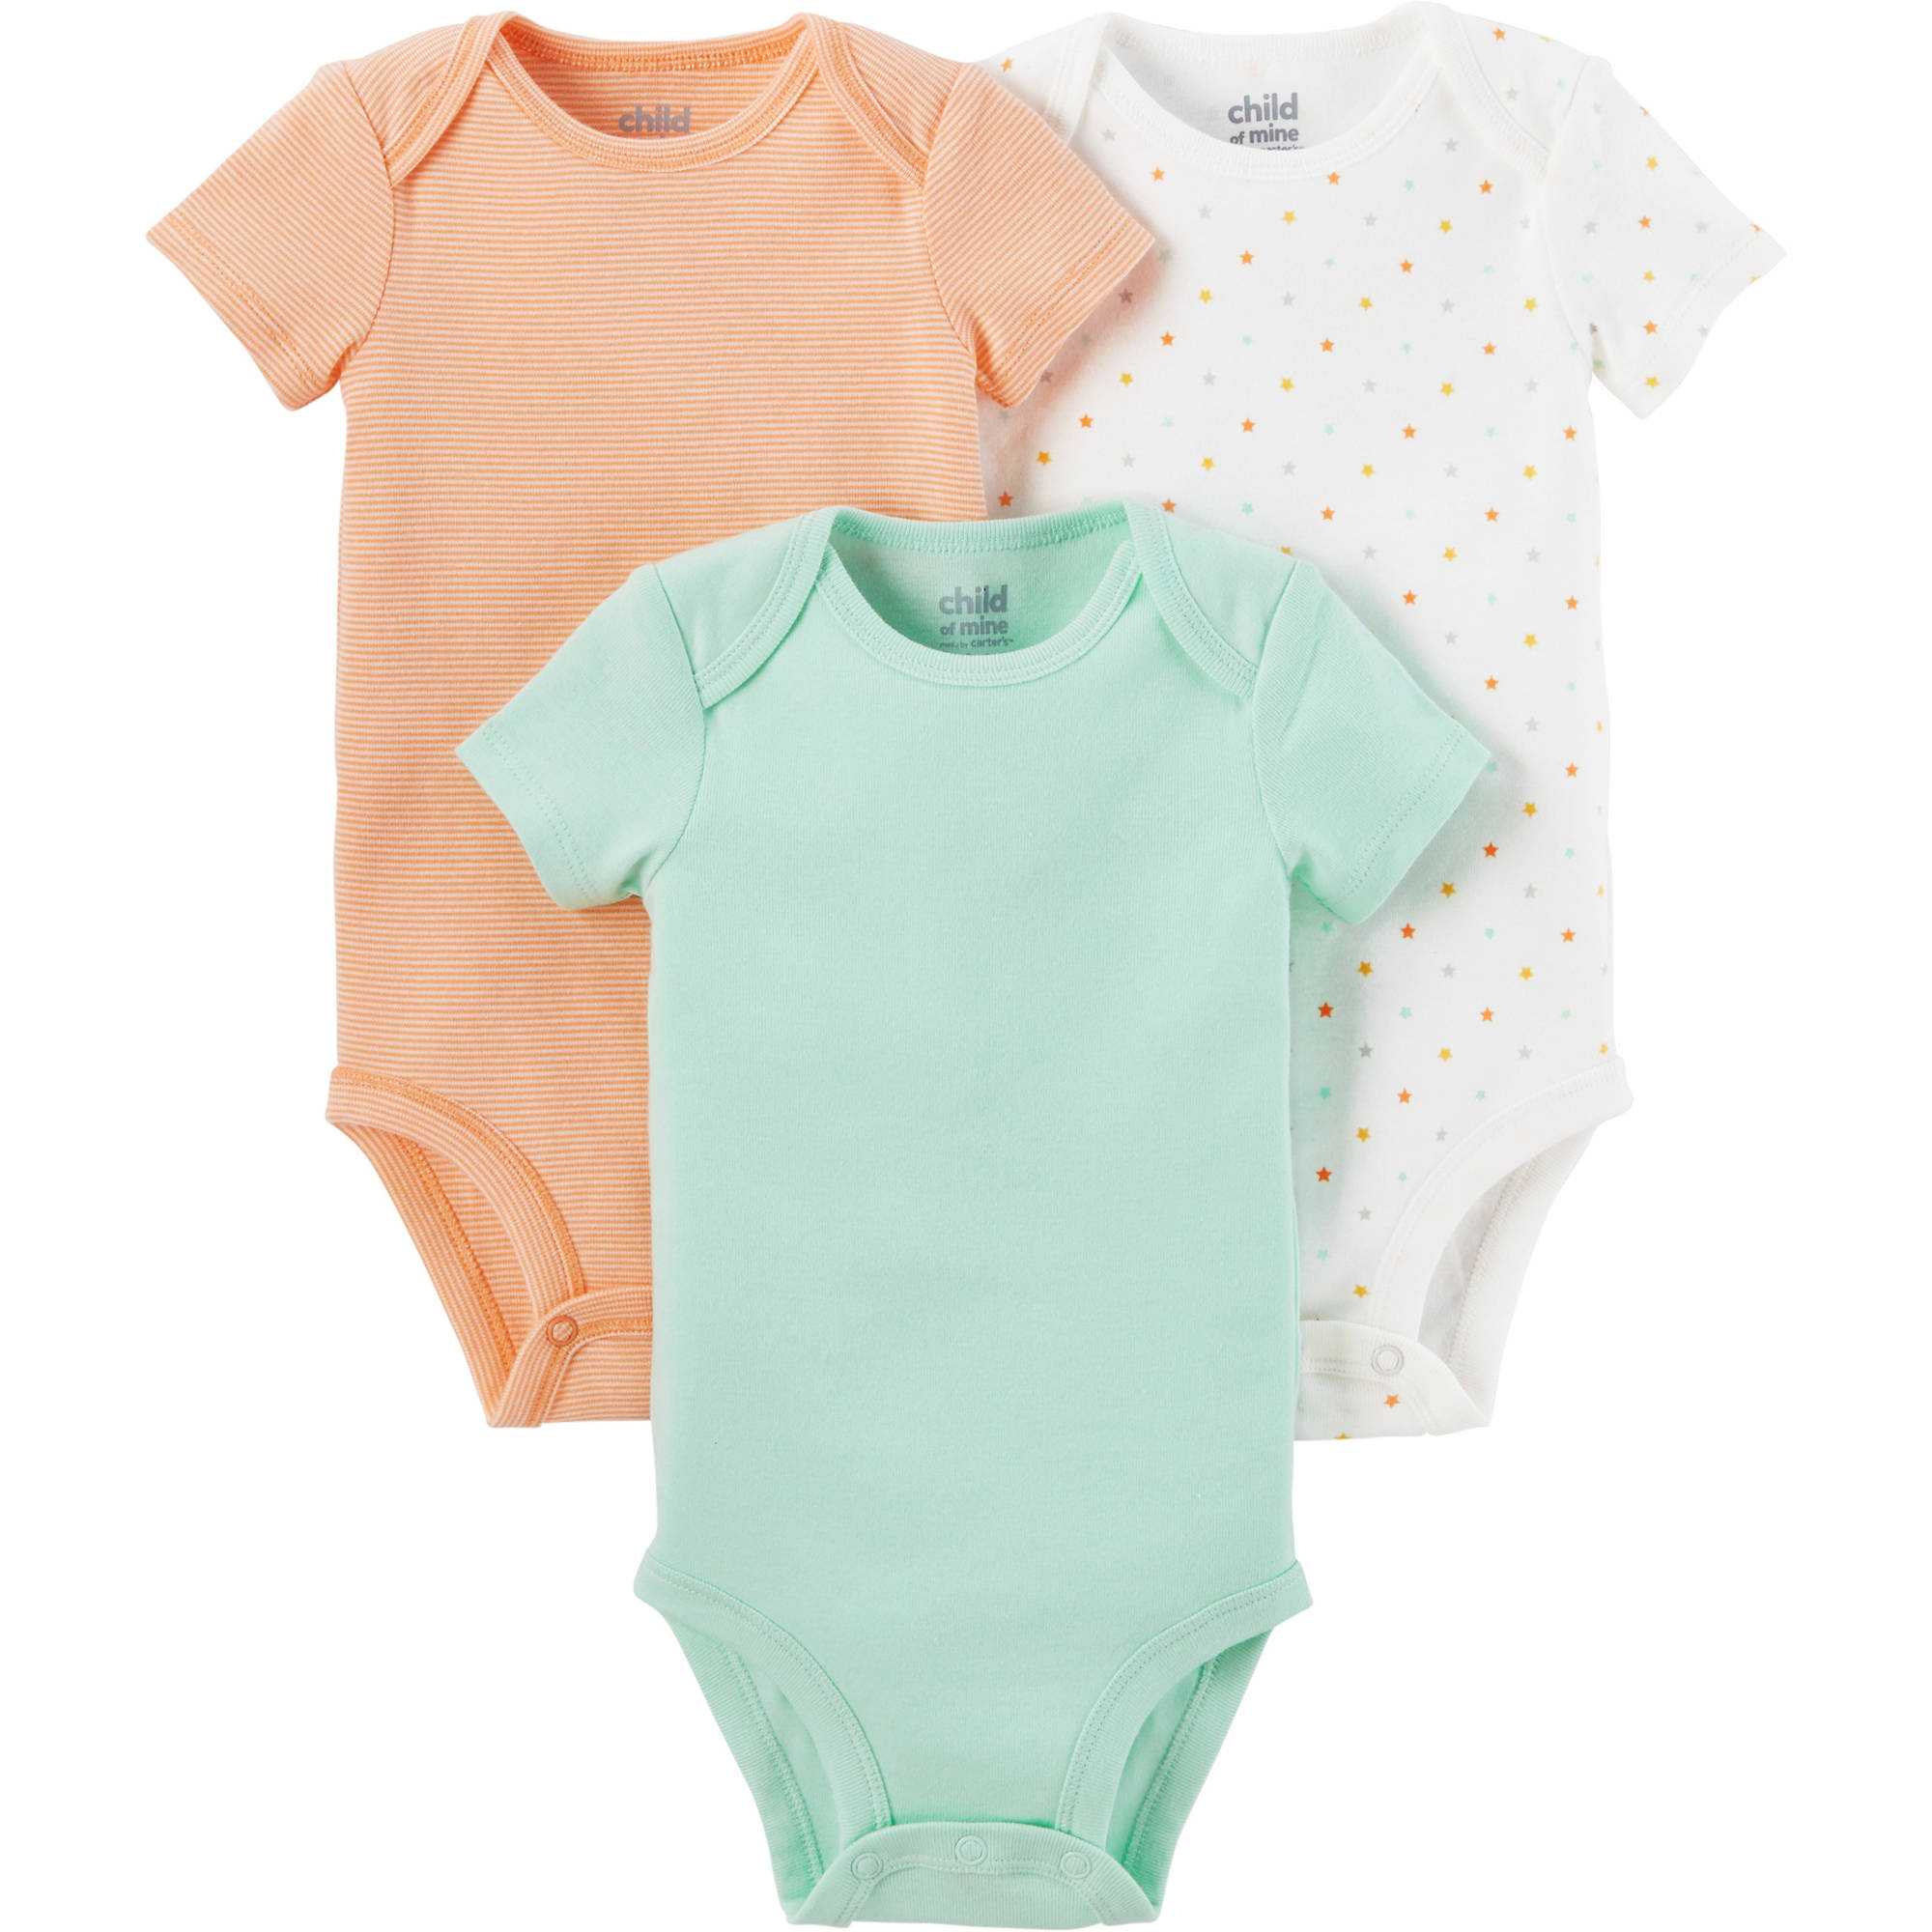 Carter's Child of Mine Baby Boy or Girl Gender Neutral Short Sleeve Bodysuits, 3-Pack - image 1 of 6